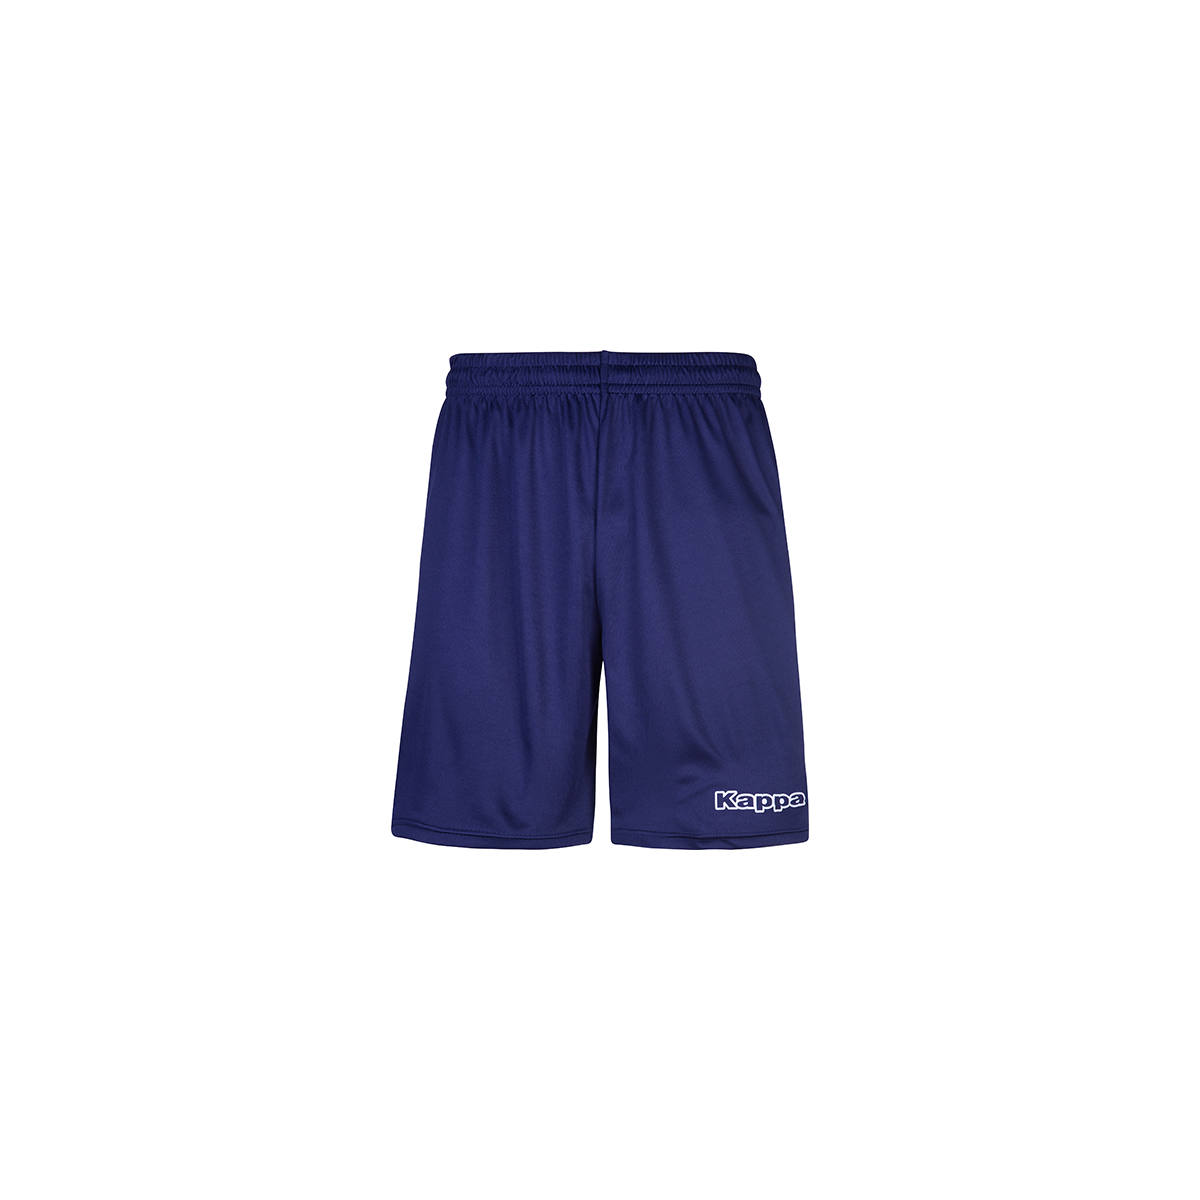 Pantalones cortos Curchet Azul Hombre - Imagen 1